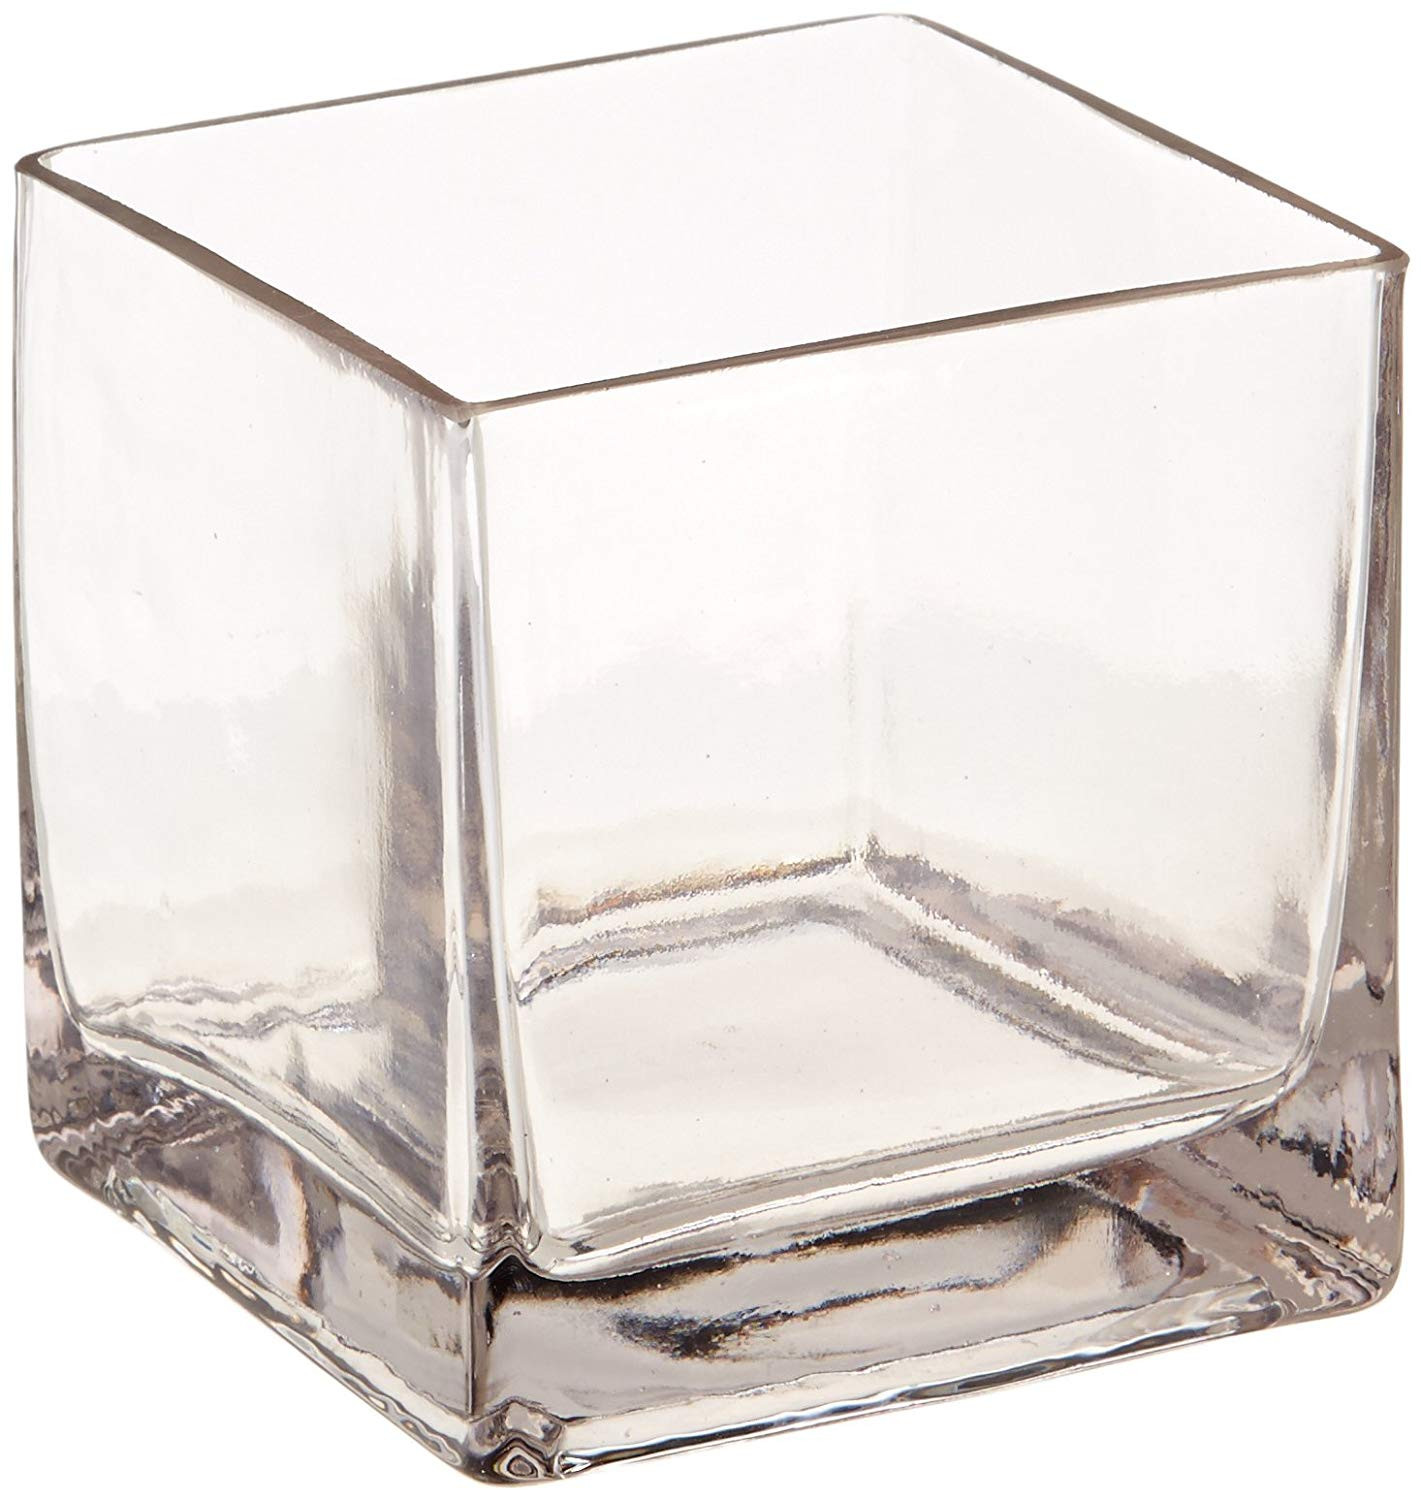 26 Popular Flat Round Glass Vase 2024 free download flat round glass vase of amazon com 12piece 4 square crystal clear glass vase home kitchen inside 71 jezfmvnl sl1500